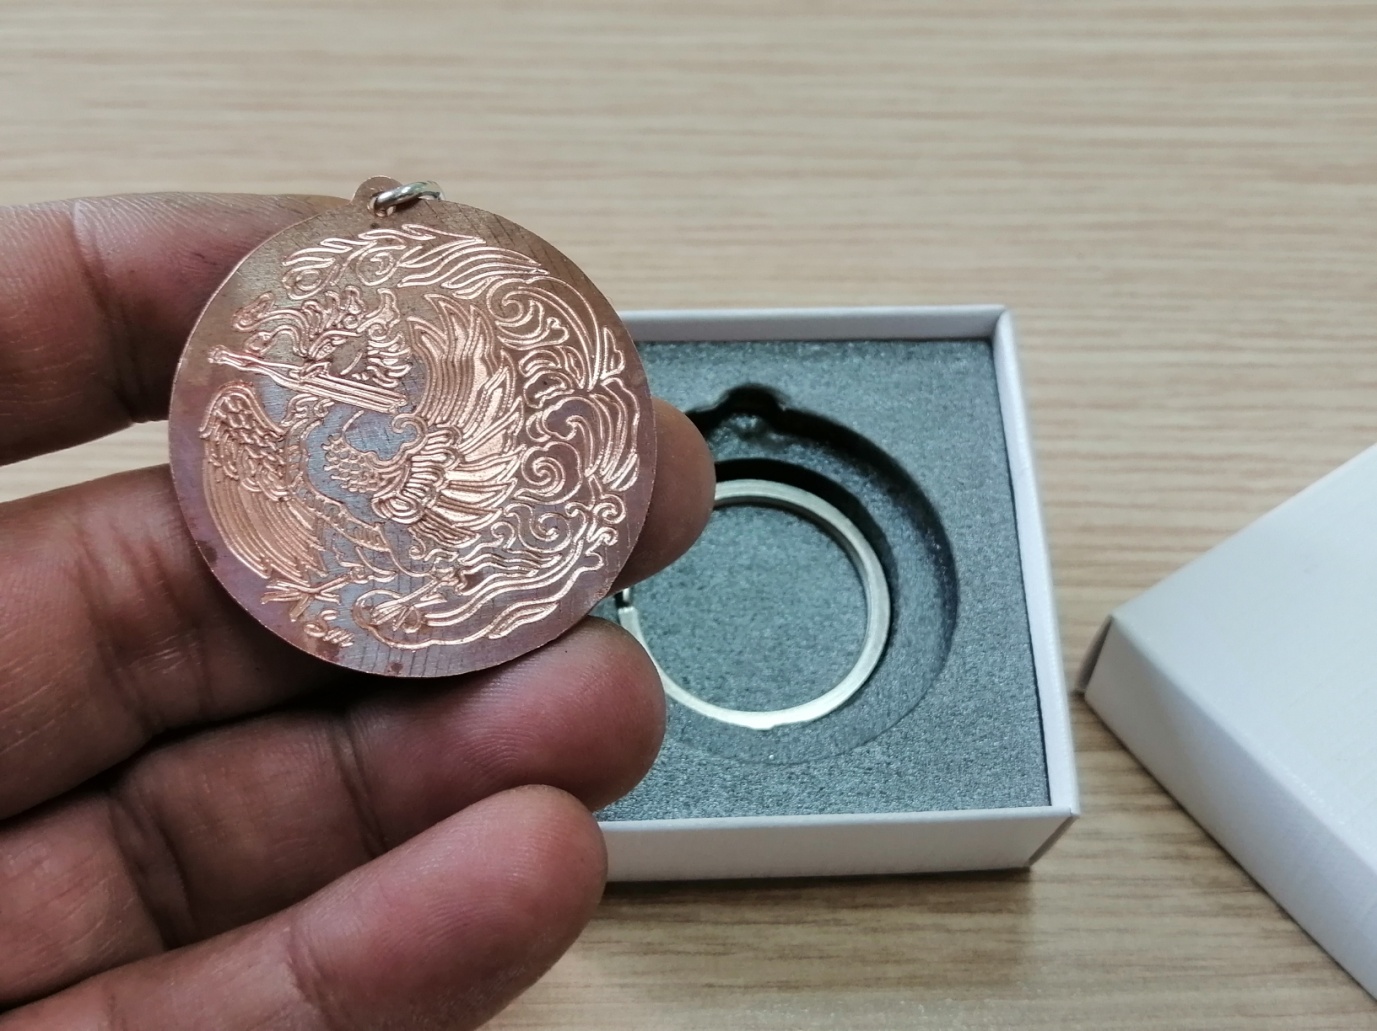 A copper key holder